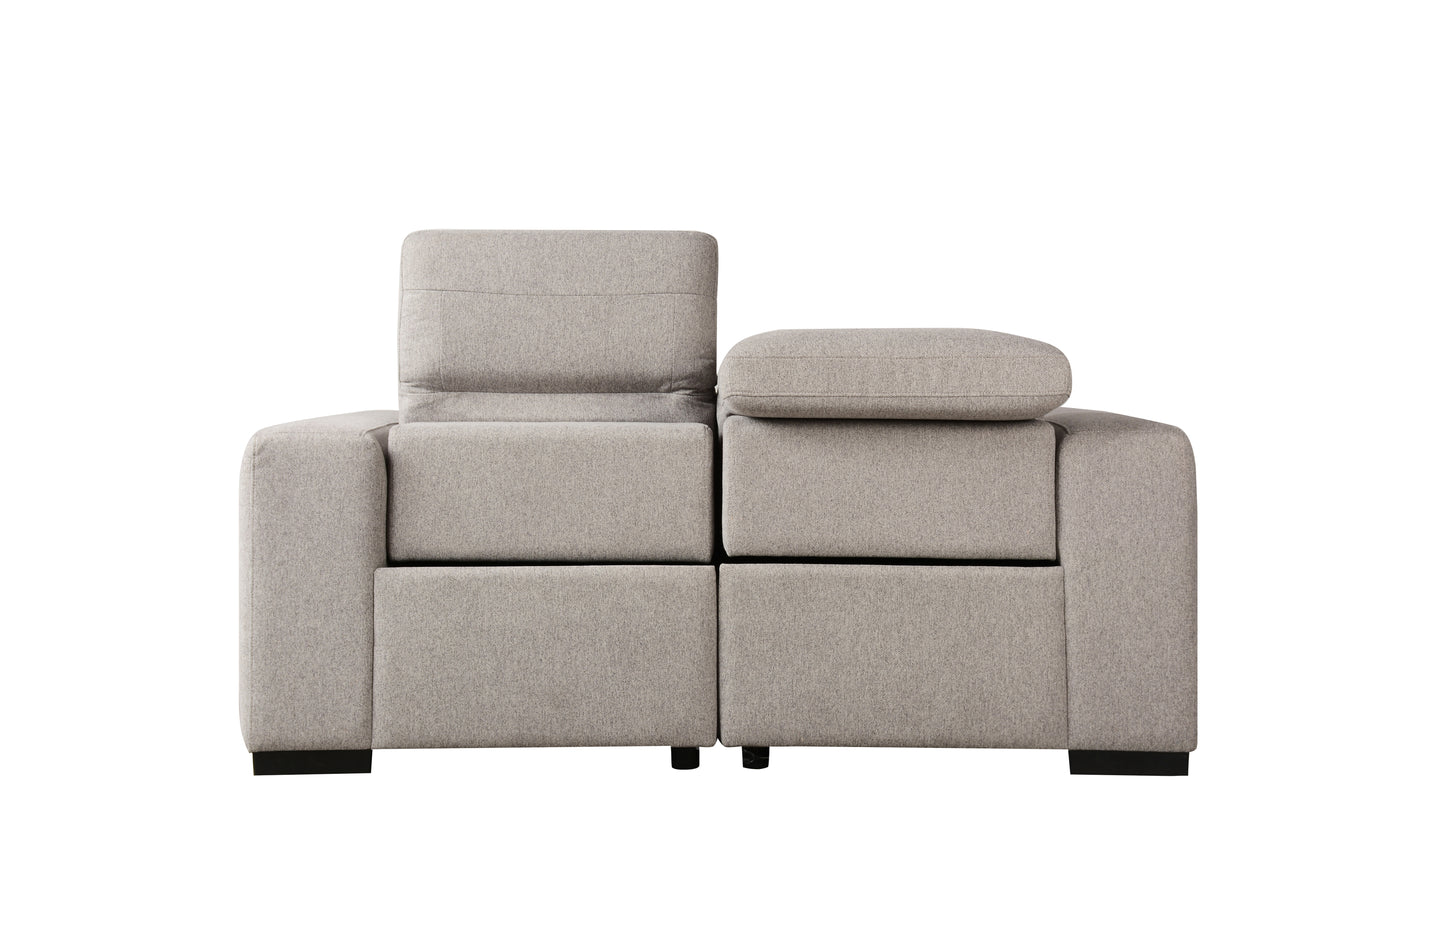 Mykonos Electric Recline Sofa (2.5 Seater)